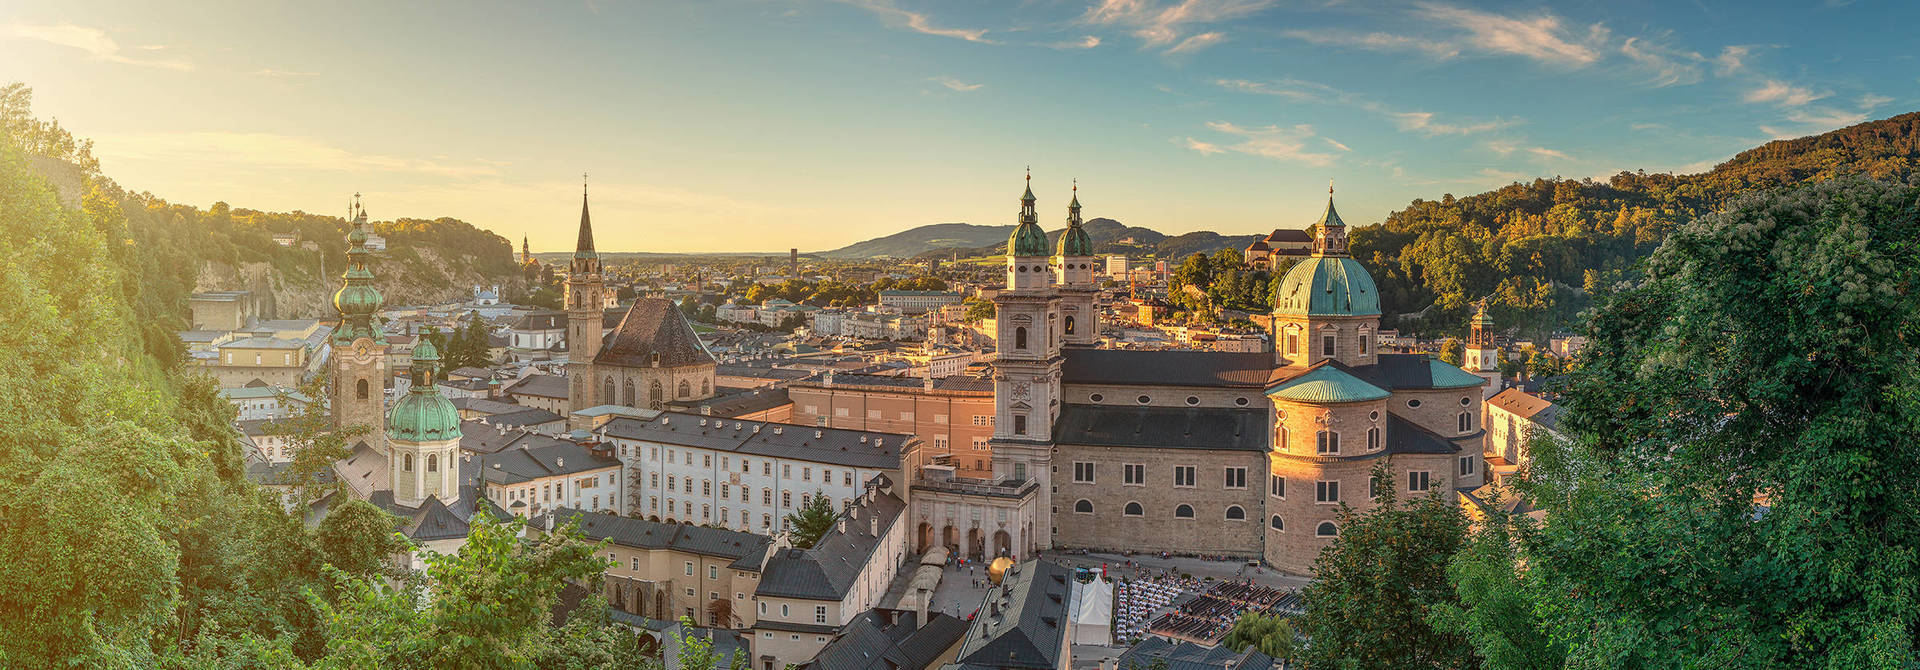 Исследуйте город пешком - Hyperion Hotel Salzburg